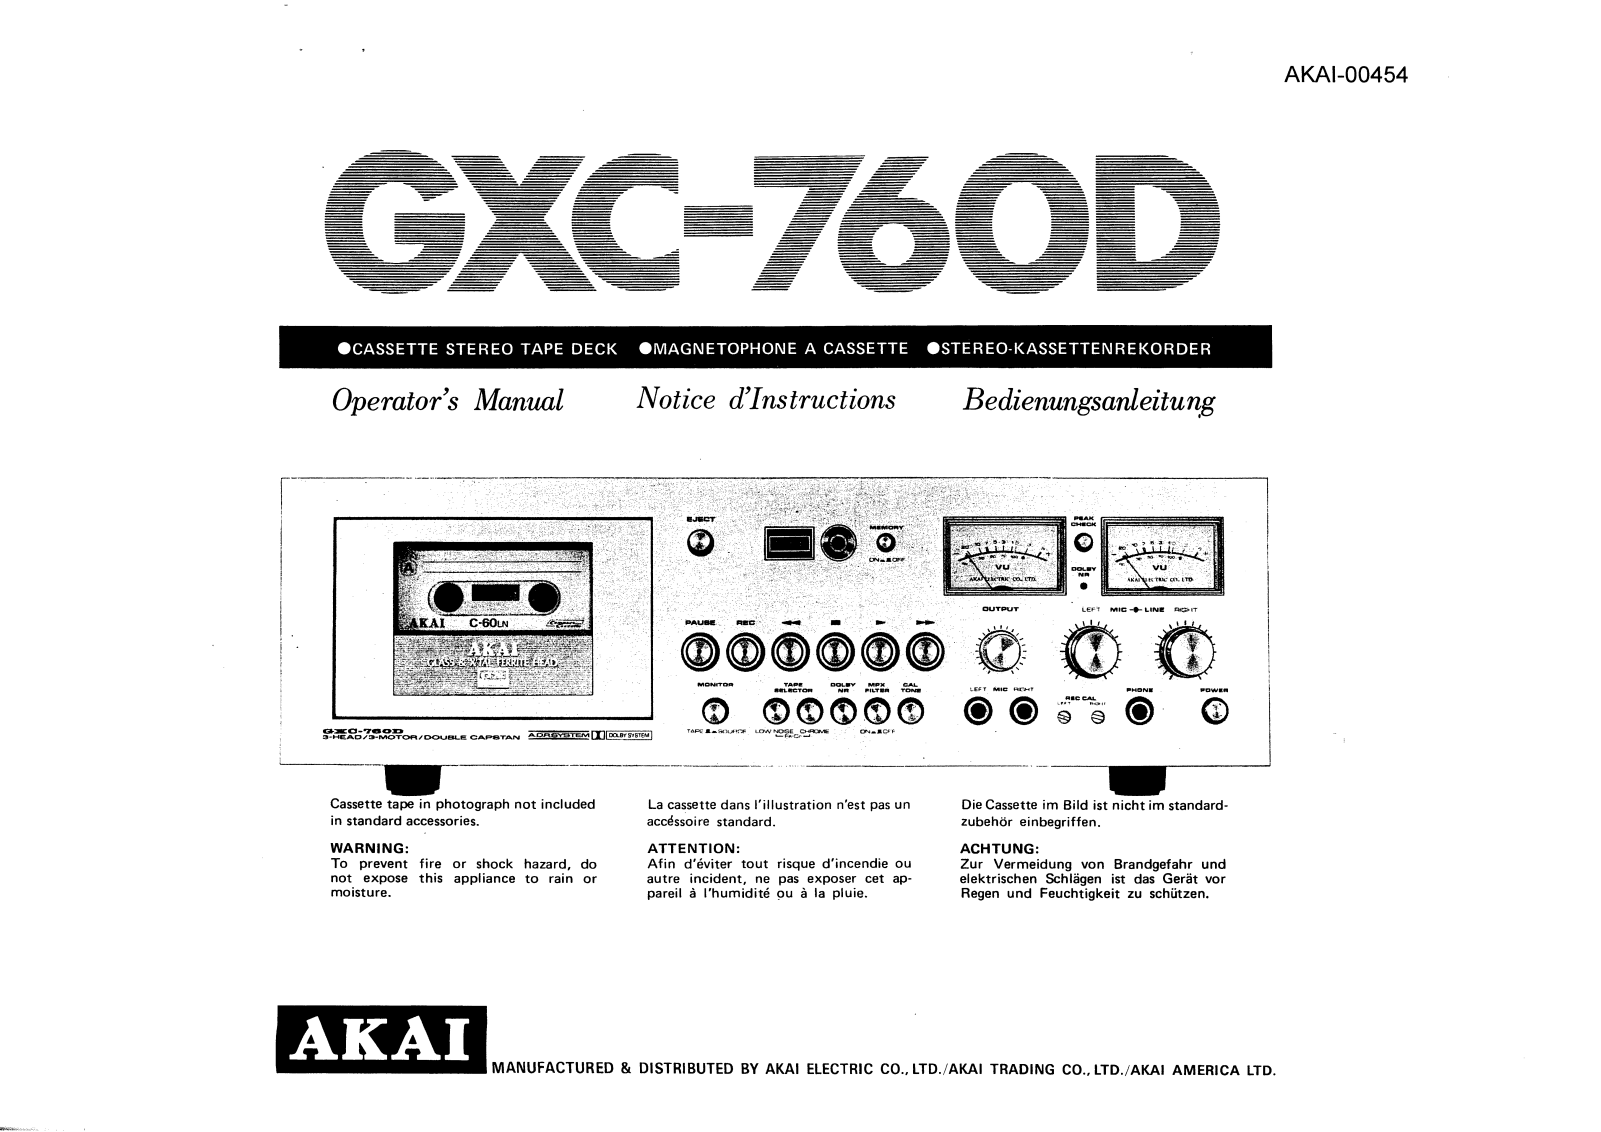 Akai GXC-760-D Owners Manual